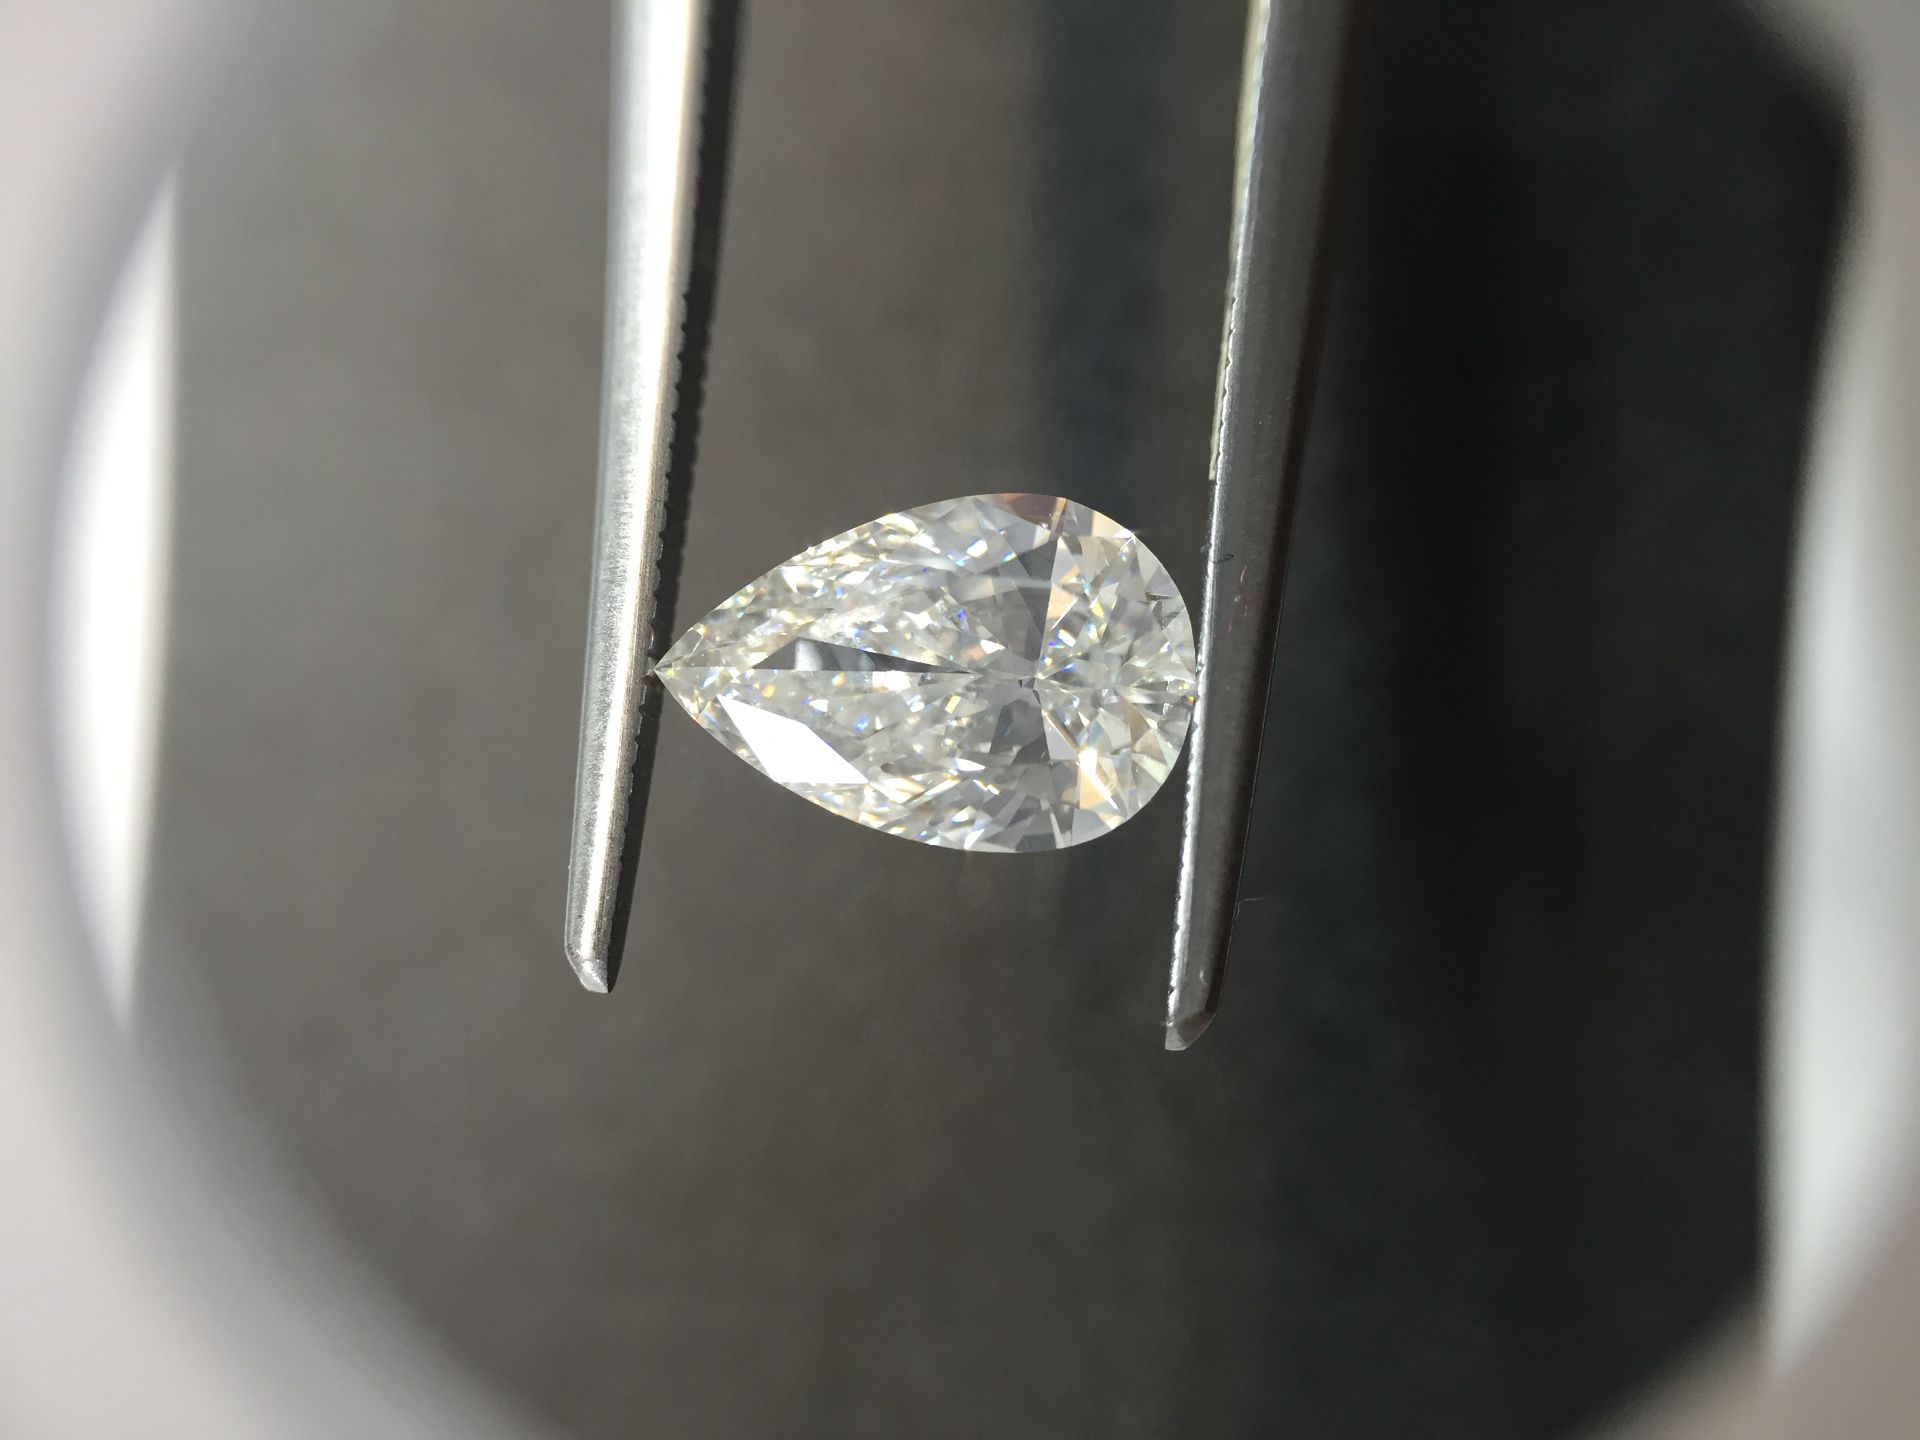 1.01ct pear cut diamond. F colour, SI1 clarity. GIA certification _ 1172582773. 9.15 x 6.11 x 3.